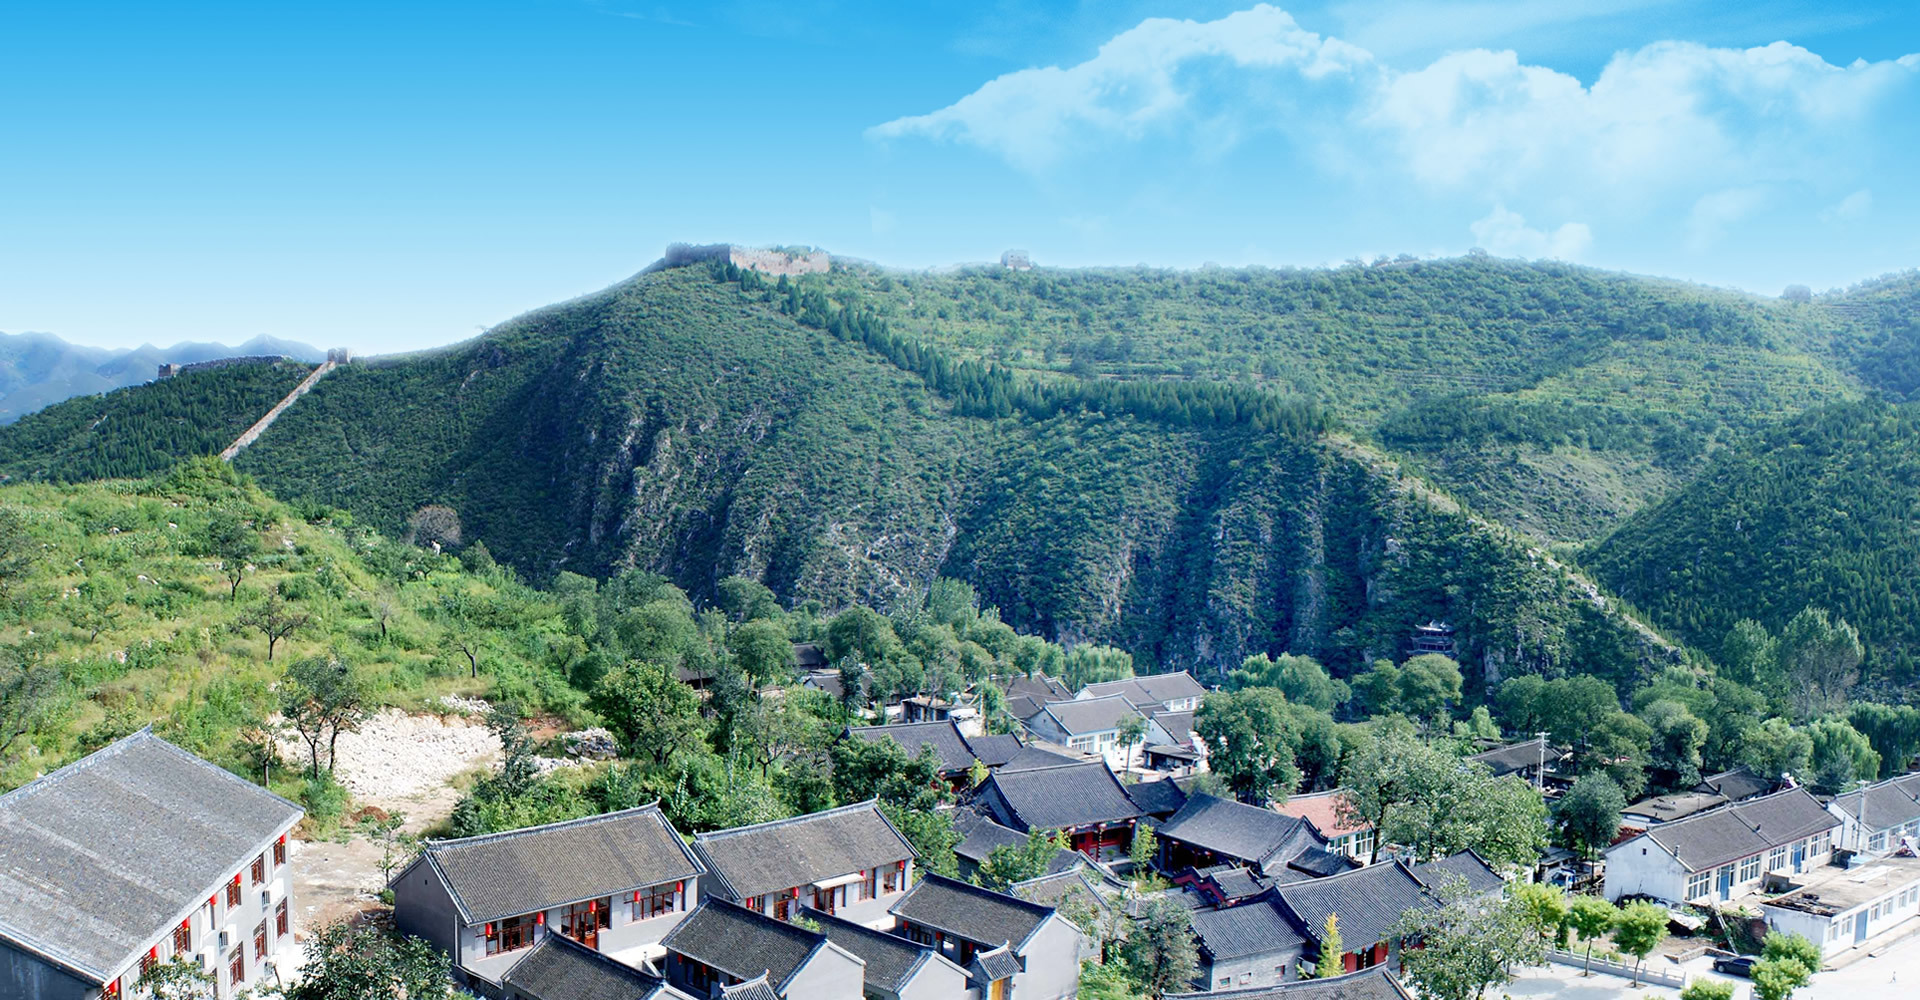 Baiyangyu Great Wall Tourist Area